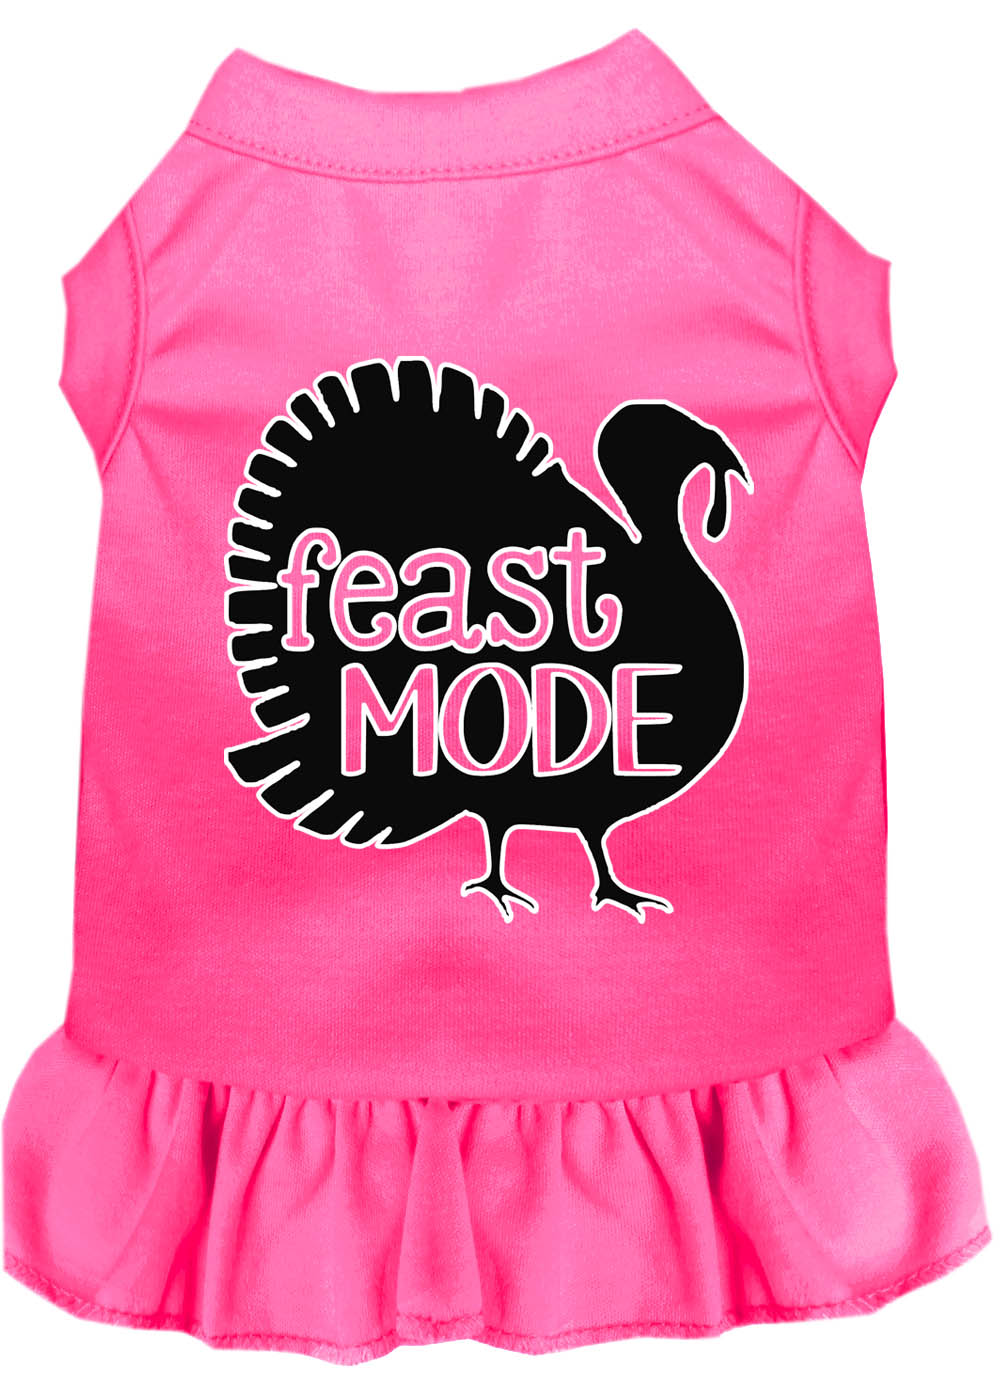 Feast Mode Screen Print Dog Dress Bright Pink 4X